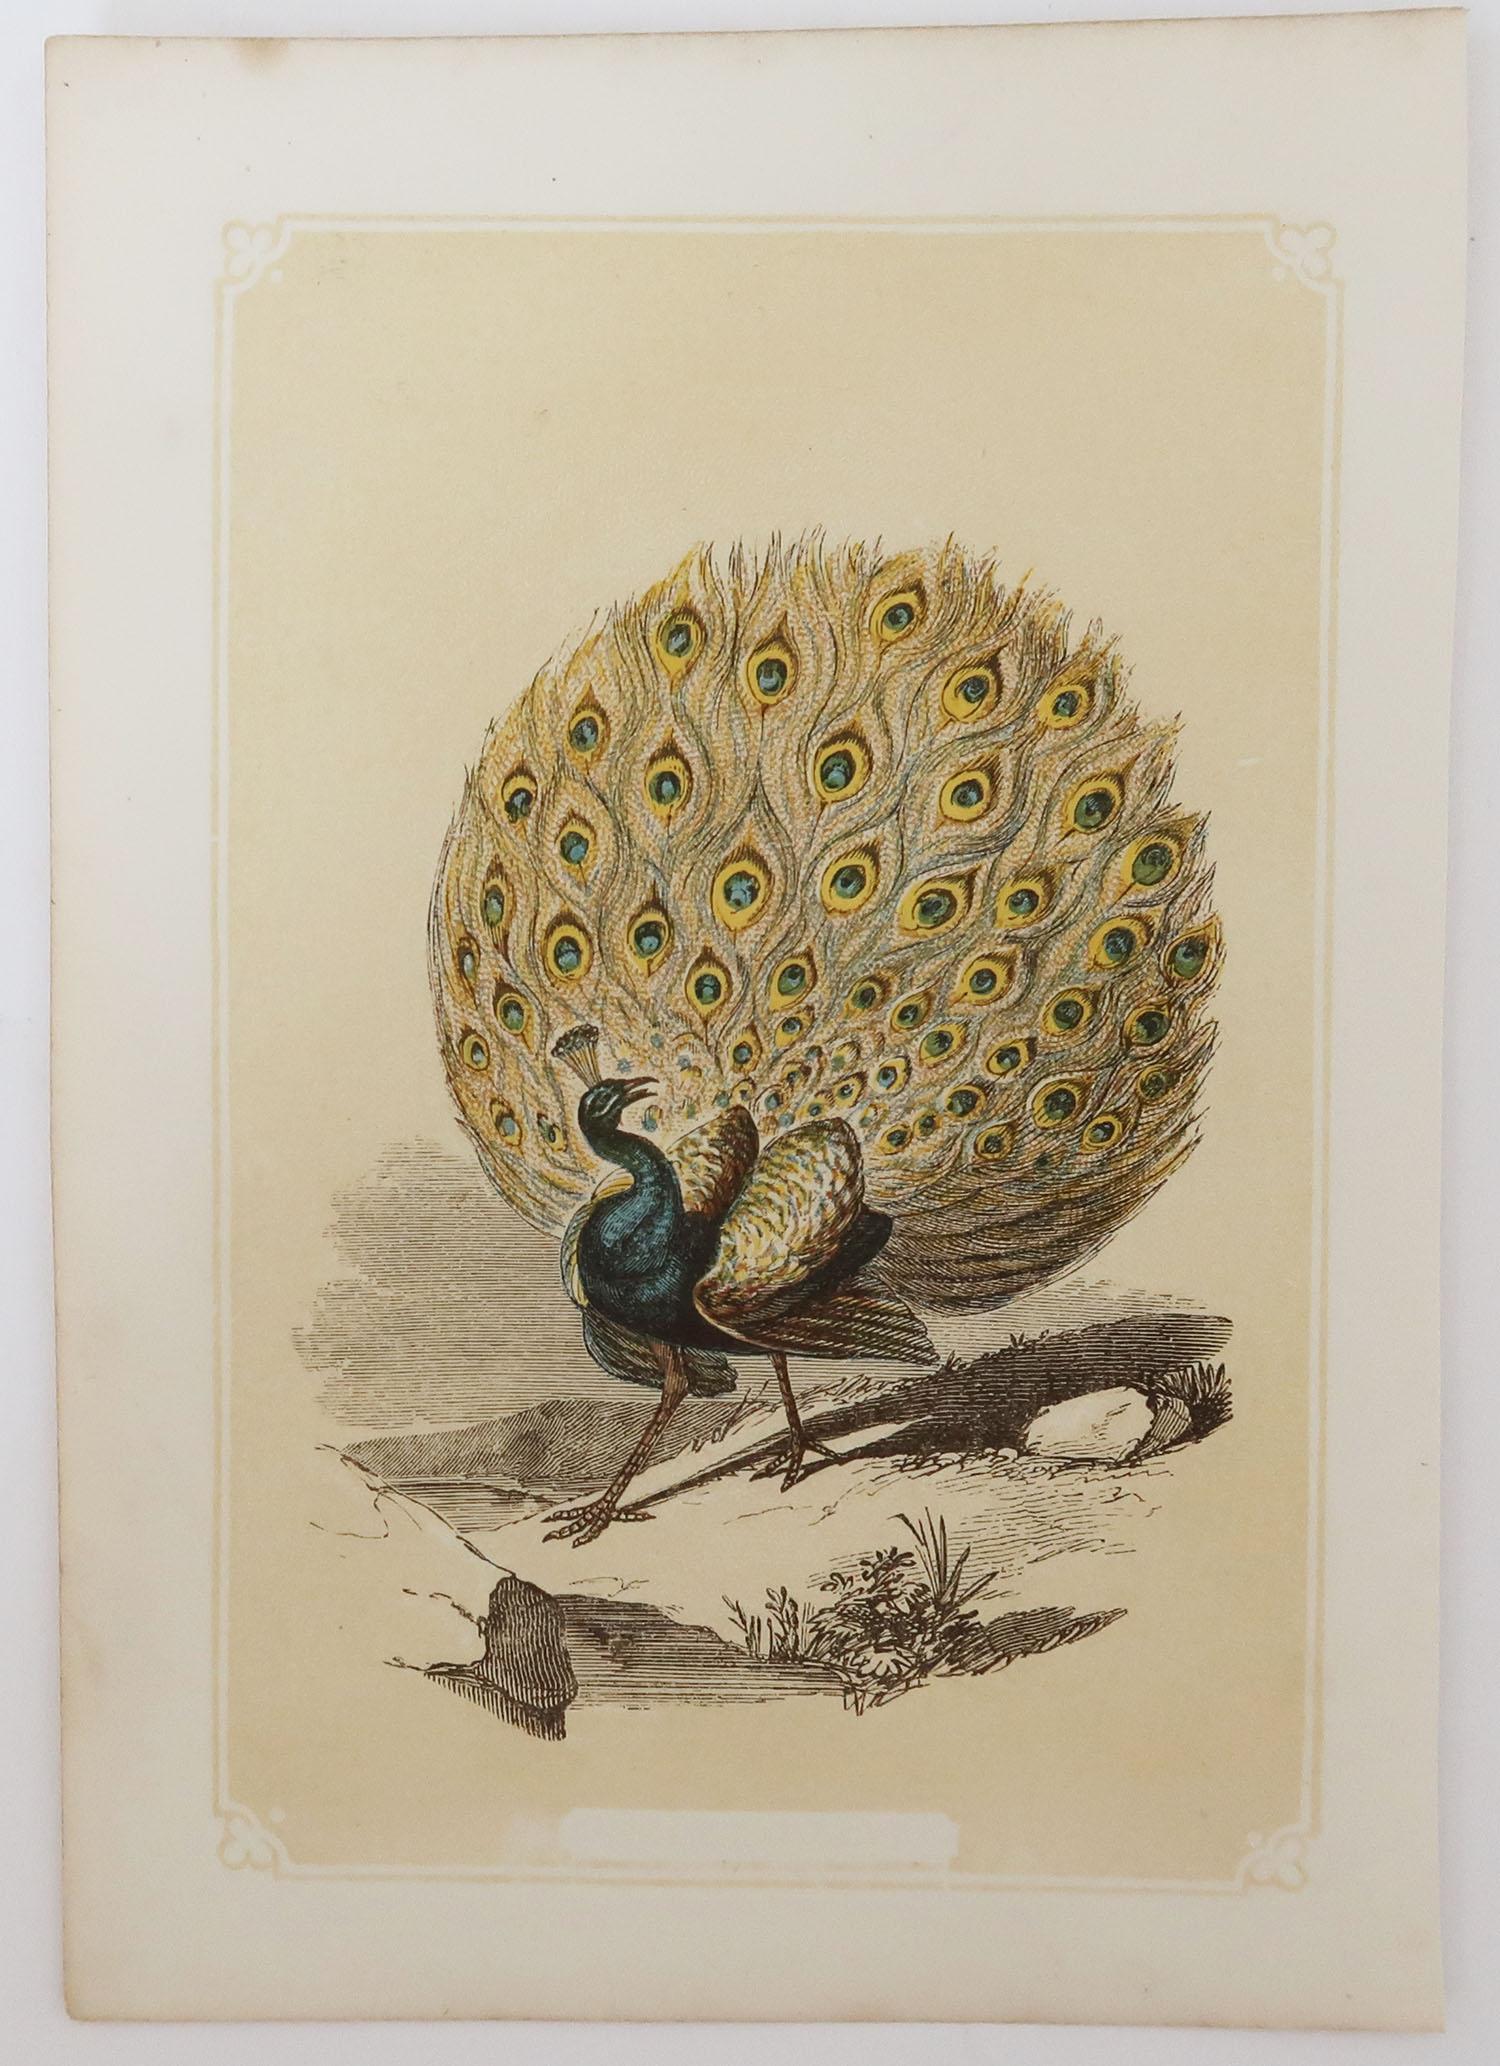 Folk Art Original Antique Bird Print, the Peacock, Tallis circa 1850